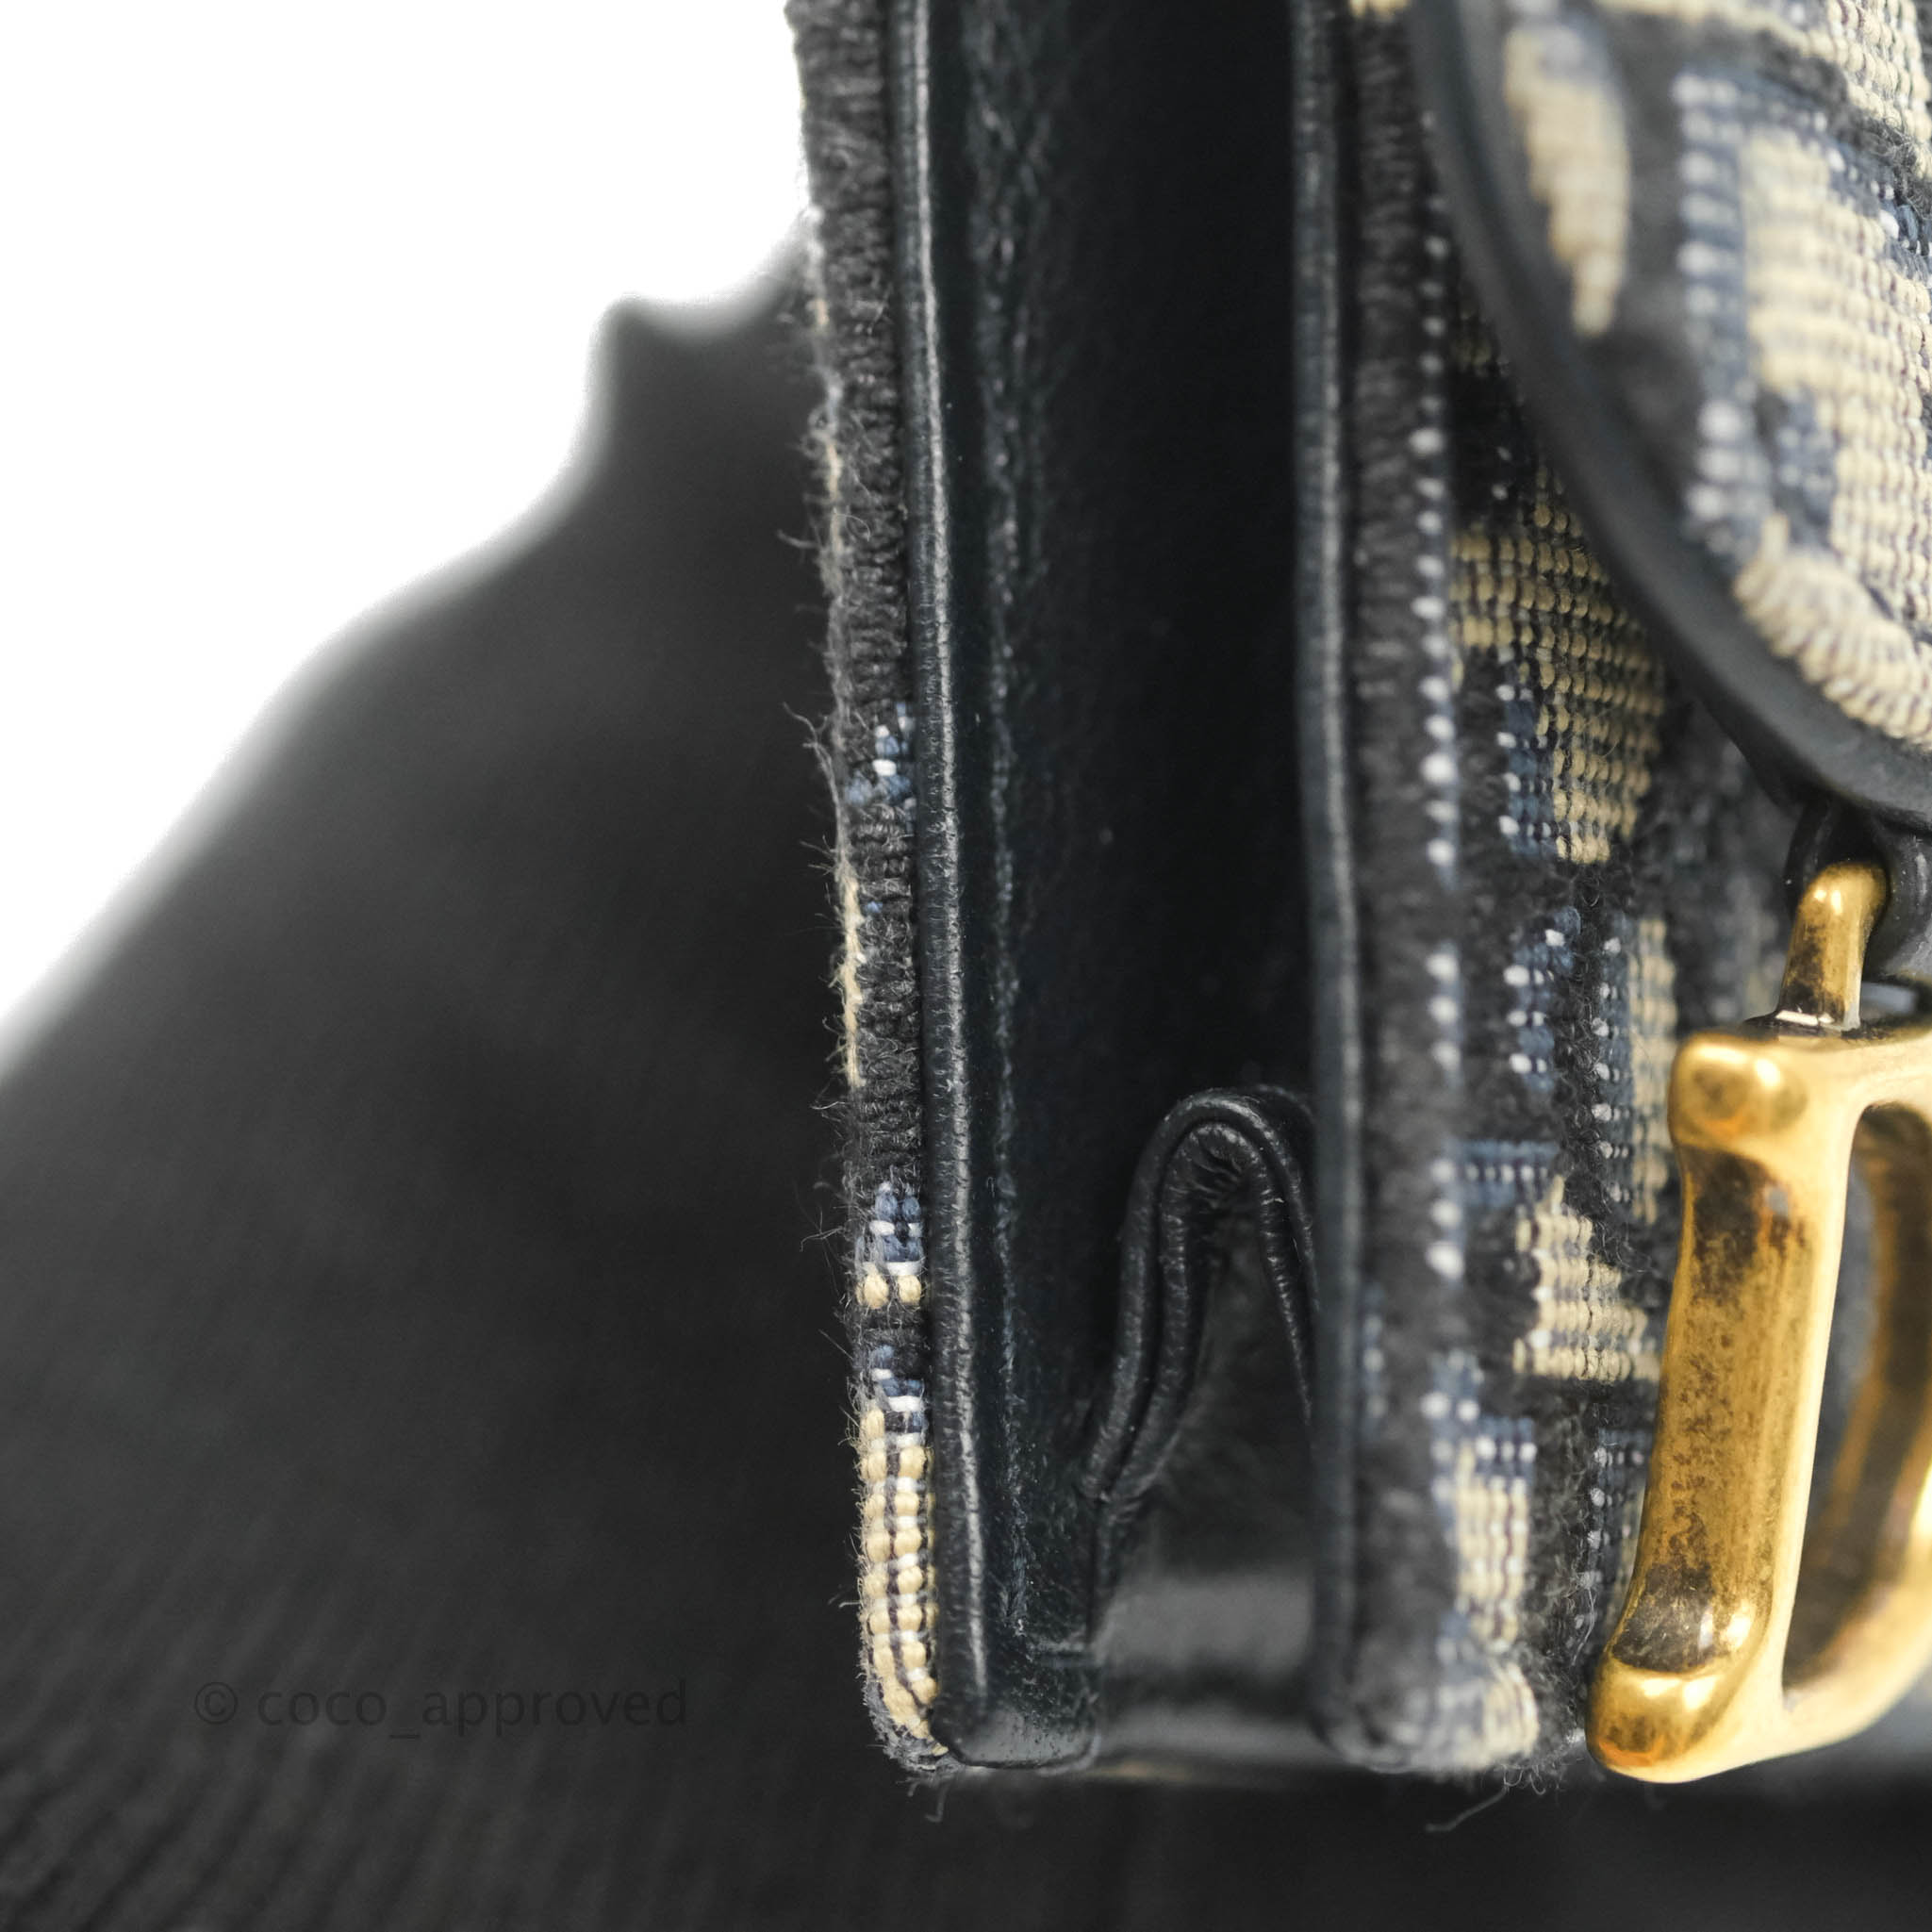 Saddle Flap Compact Zipped Card Holder Blue Dior Oblique Jacquard